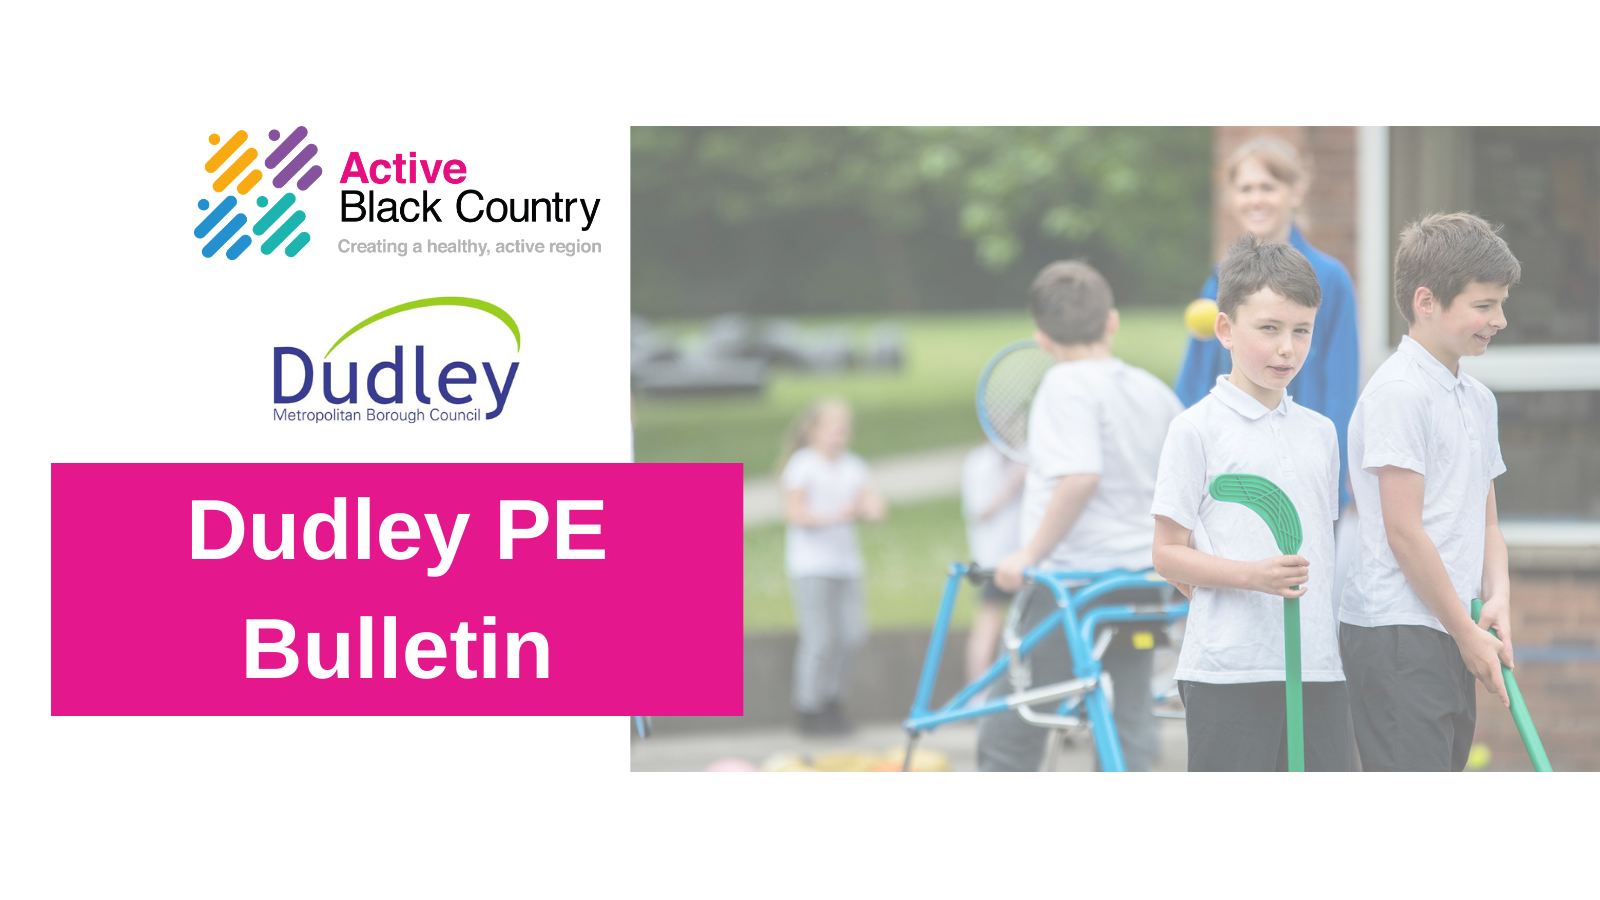 Dudley Schools PE Bulletin